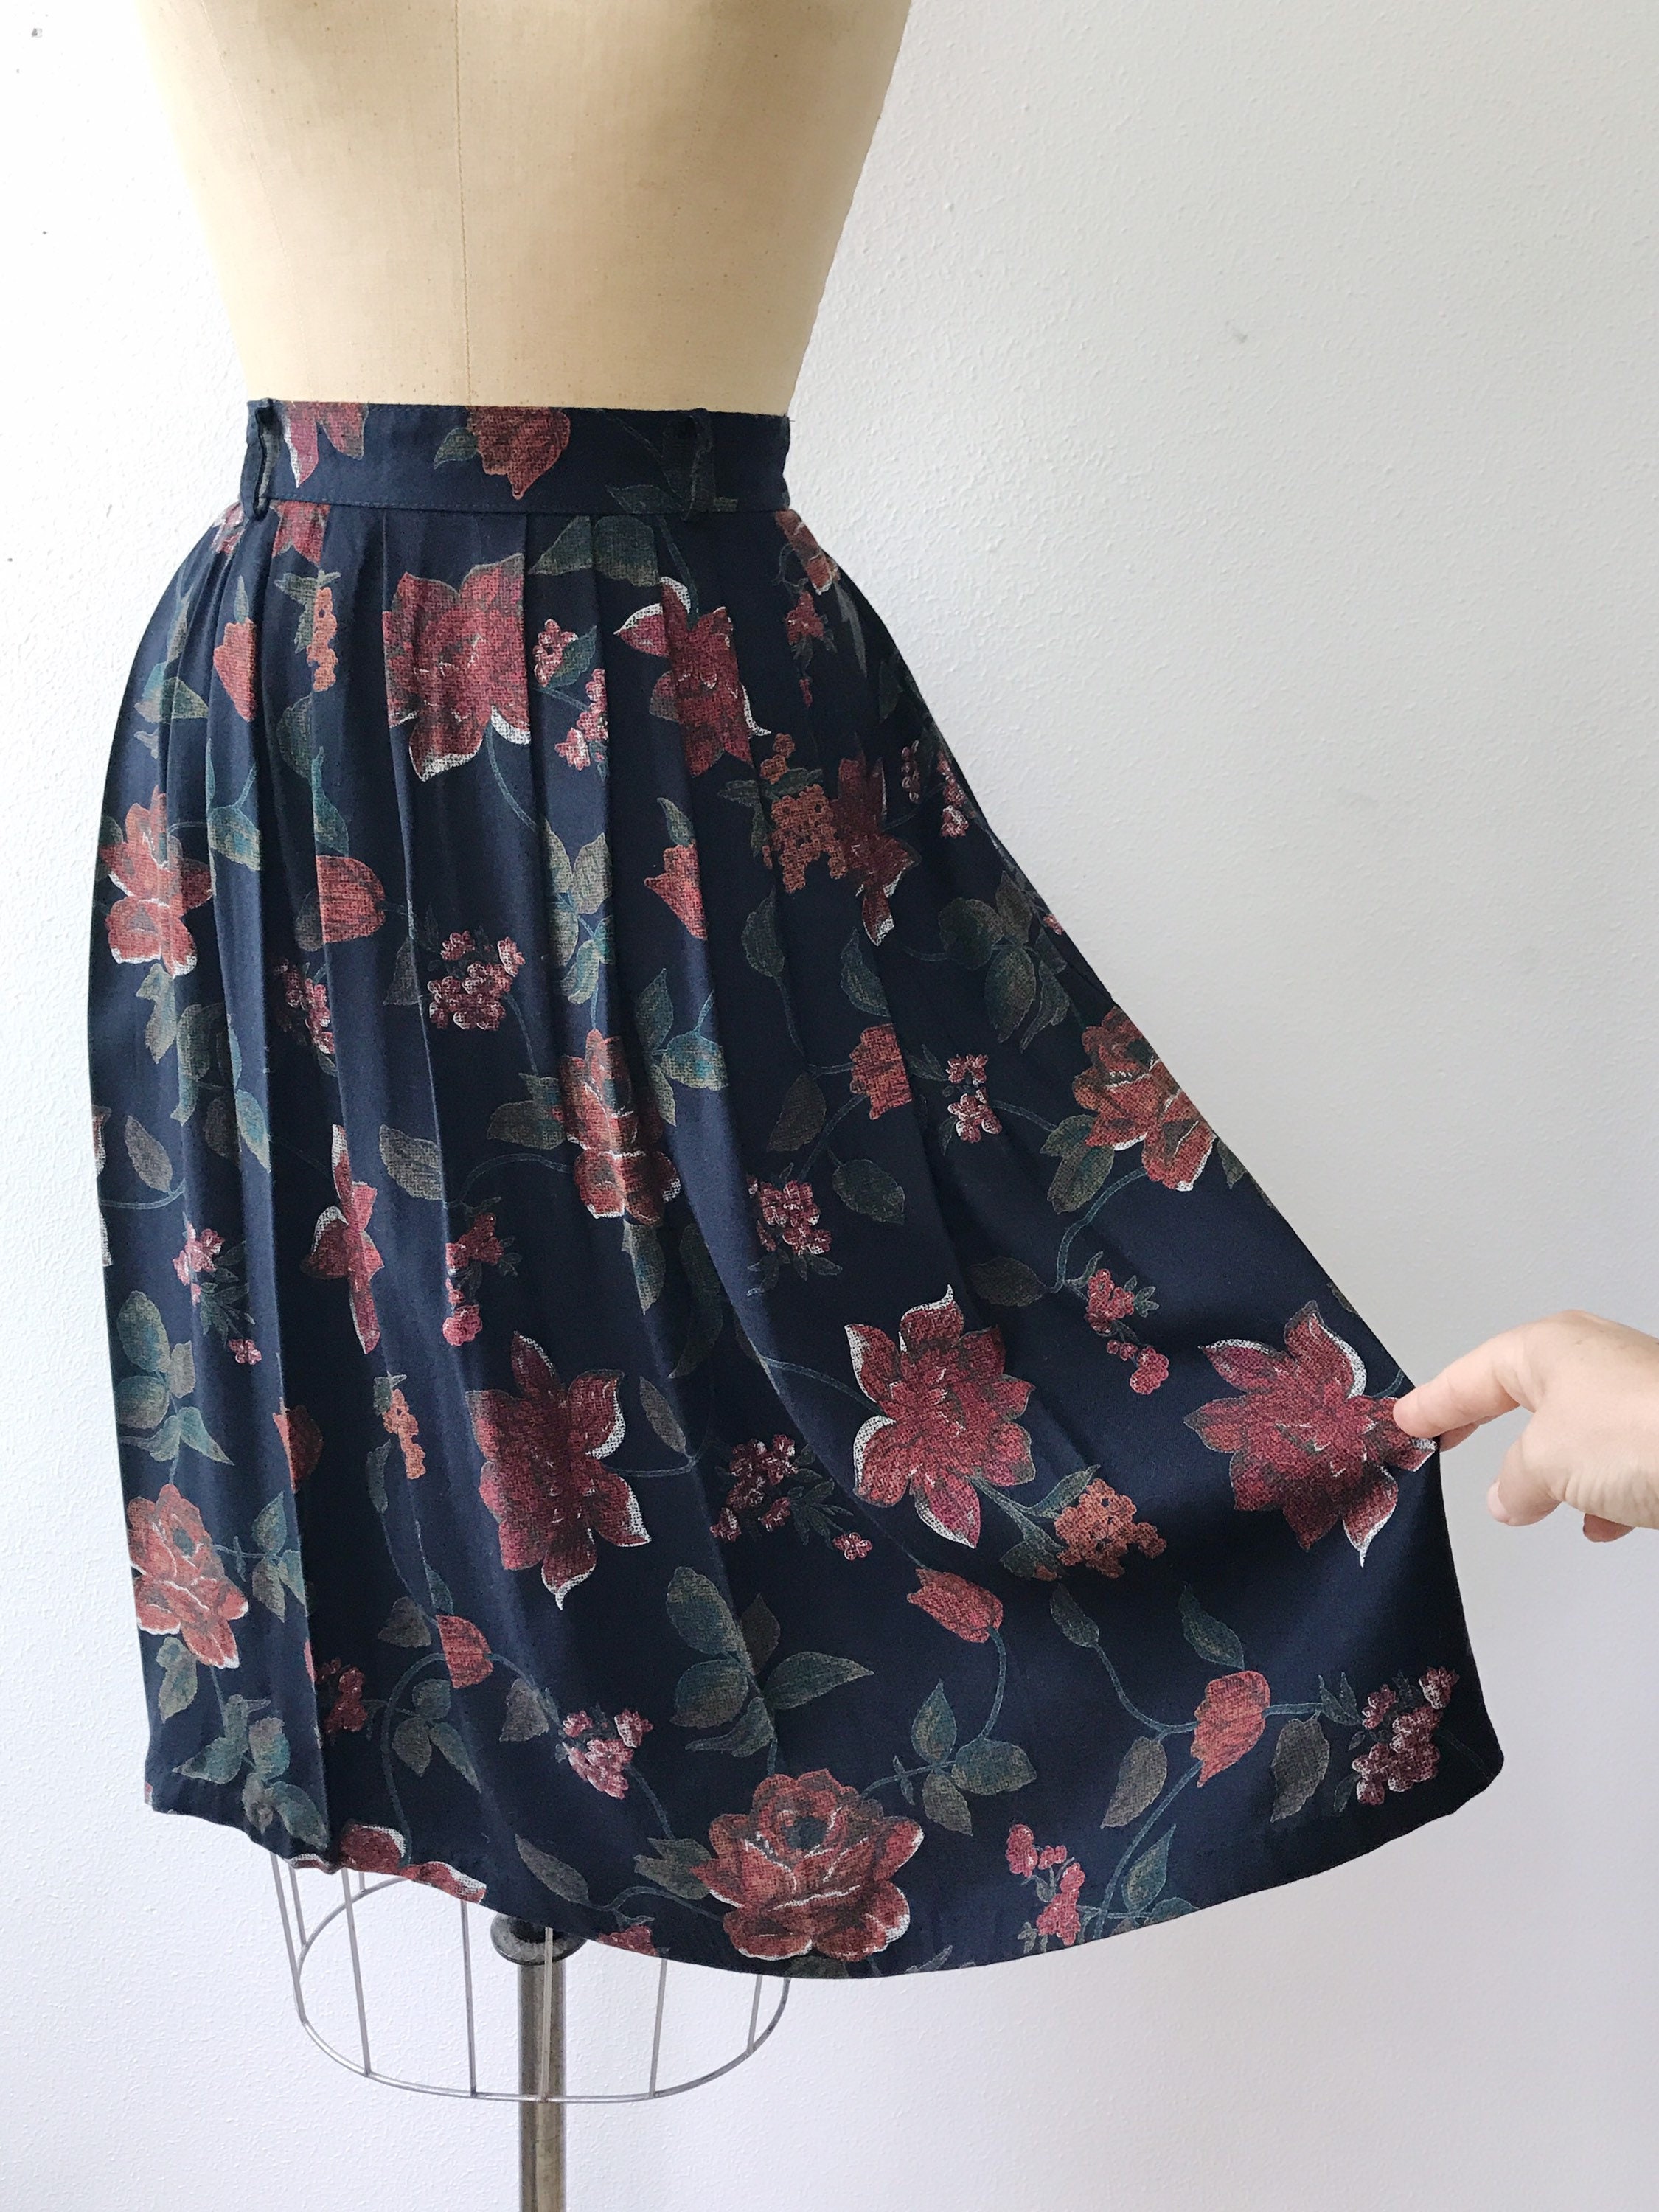 Floral print skirt / 80s vintage skirt / Navy Floral rayon skirt